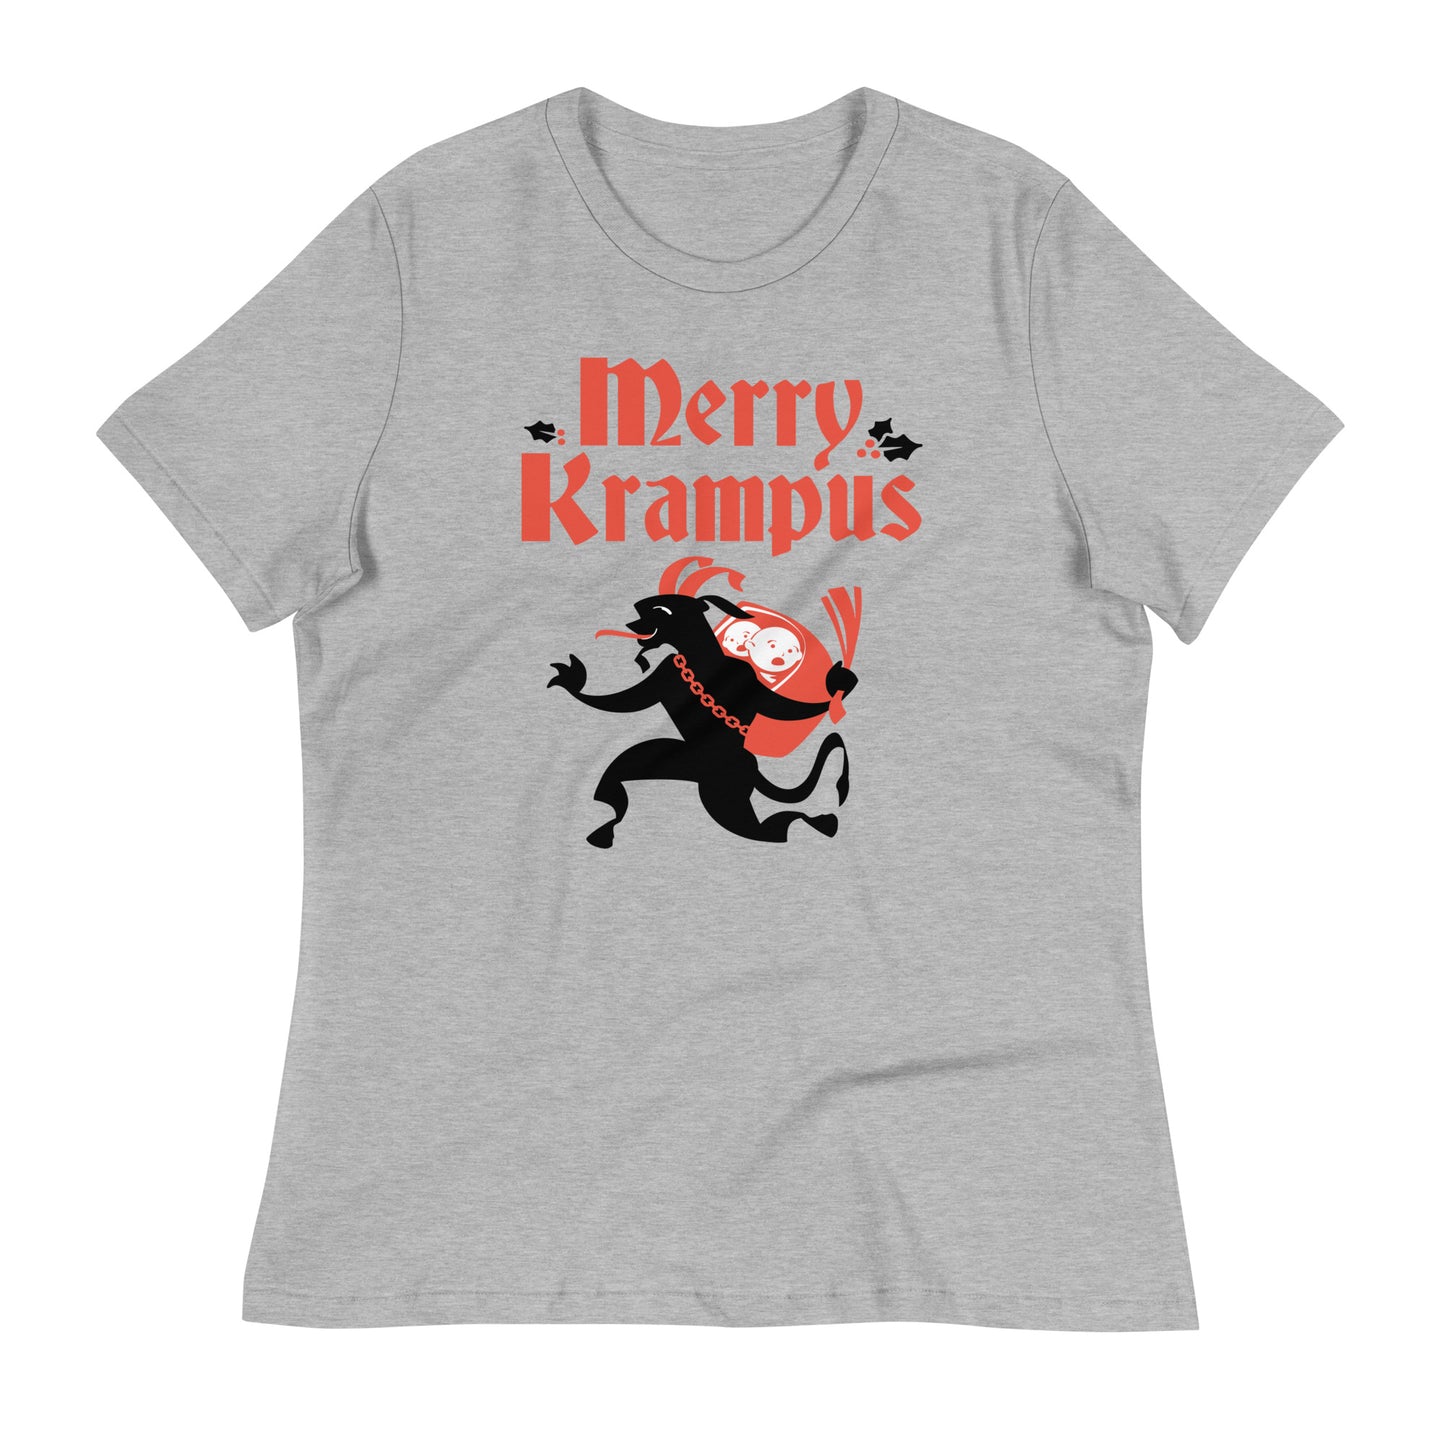 Merry Krampus Women's Signature Tee